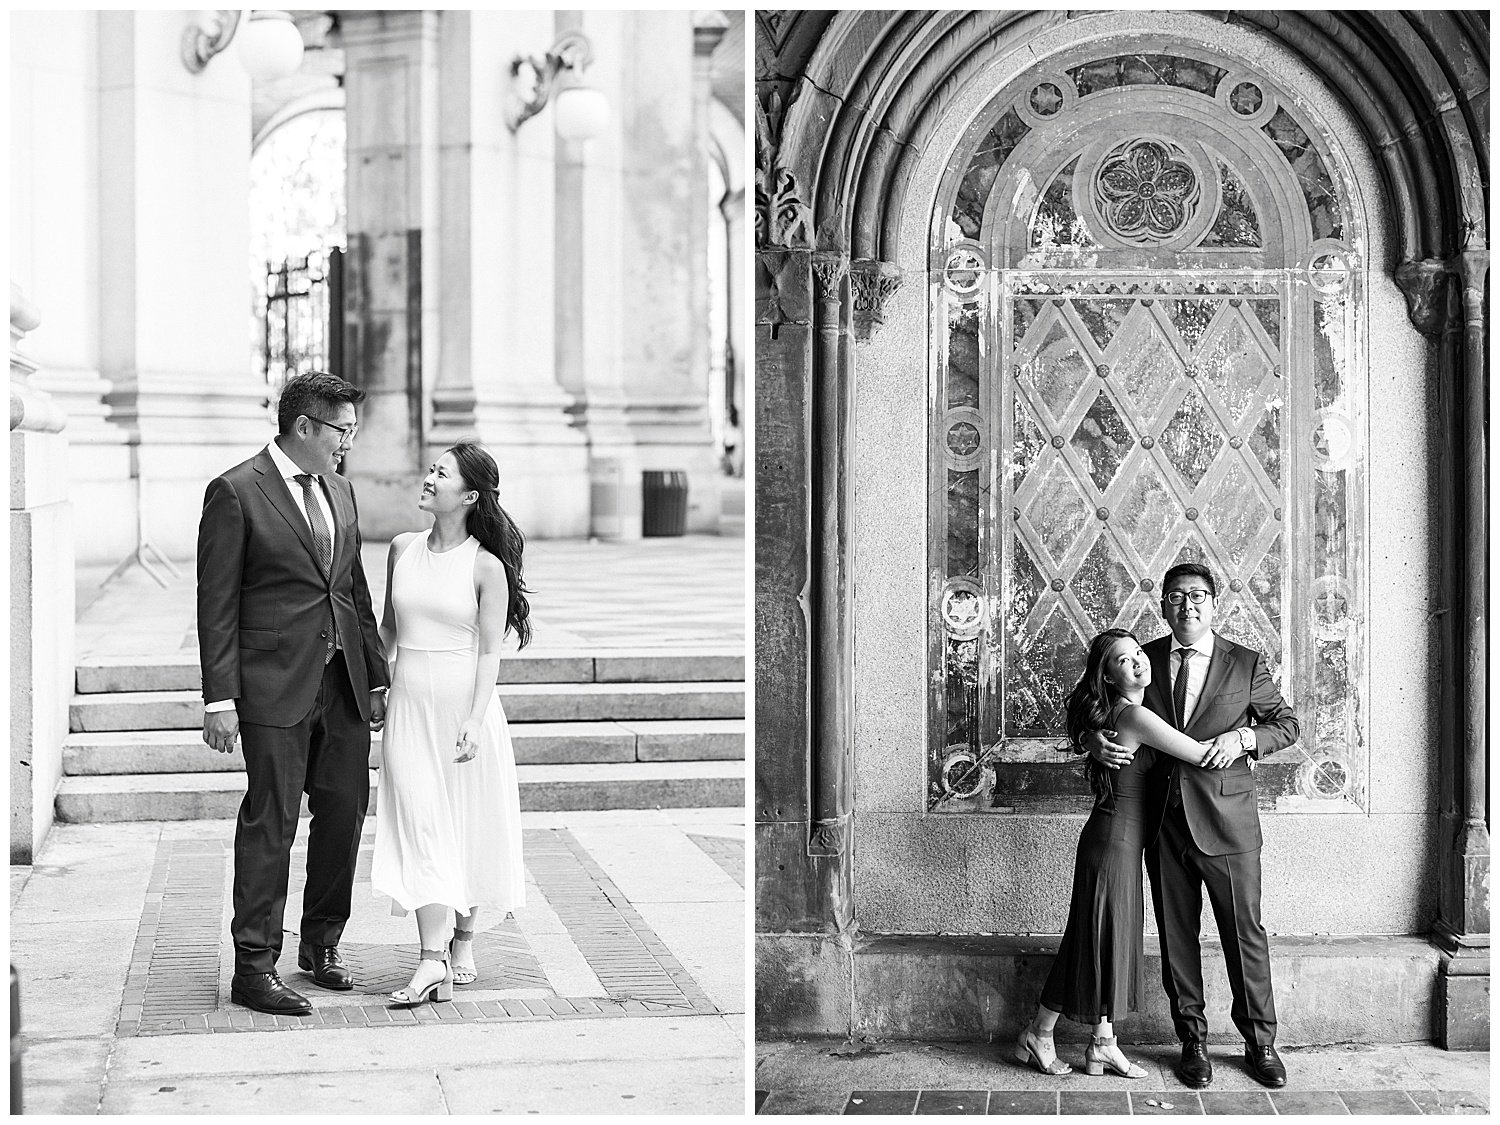 NYC-Marriage-Bureau-Elopement-Wedding-at-City-Hall-Apollo-Fields-24.jpg